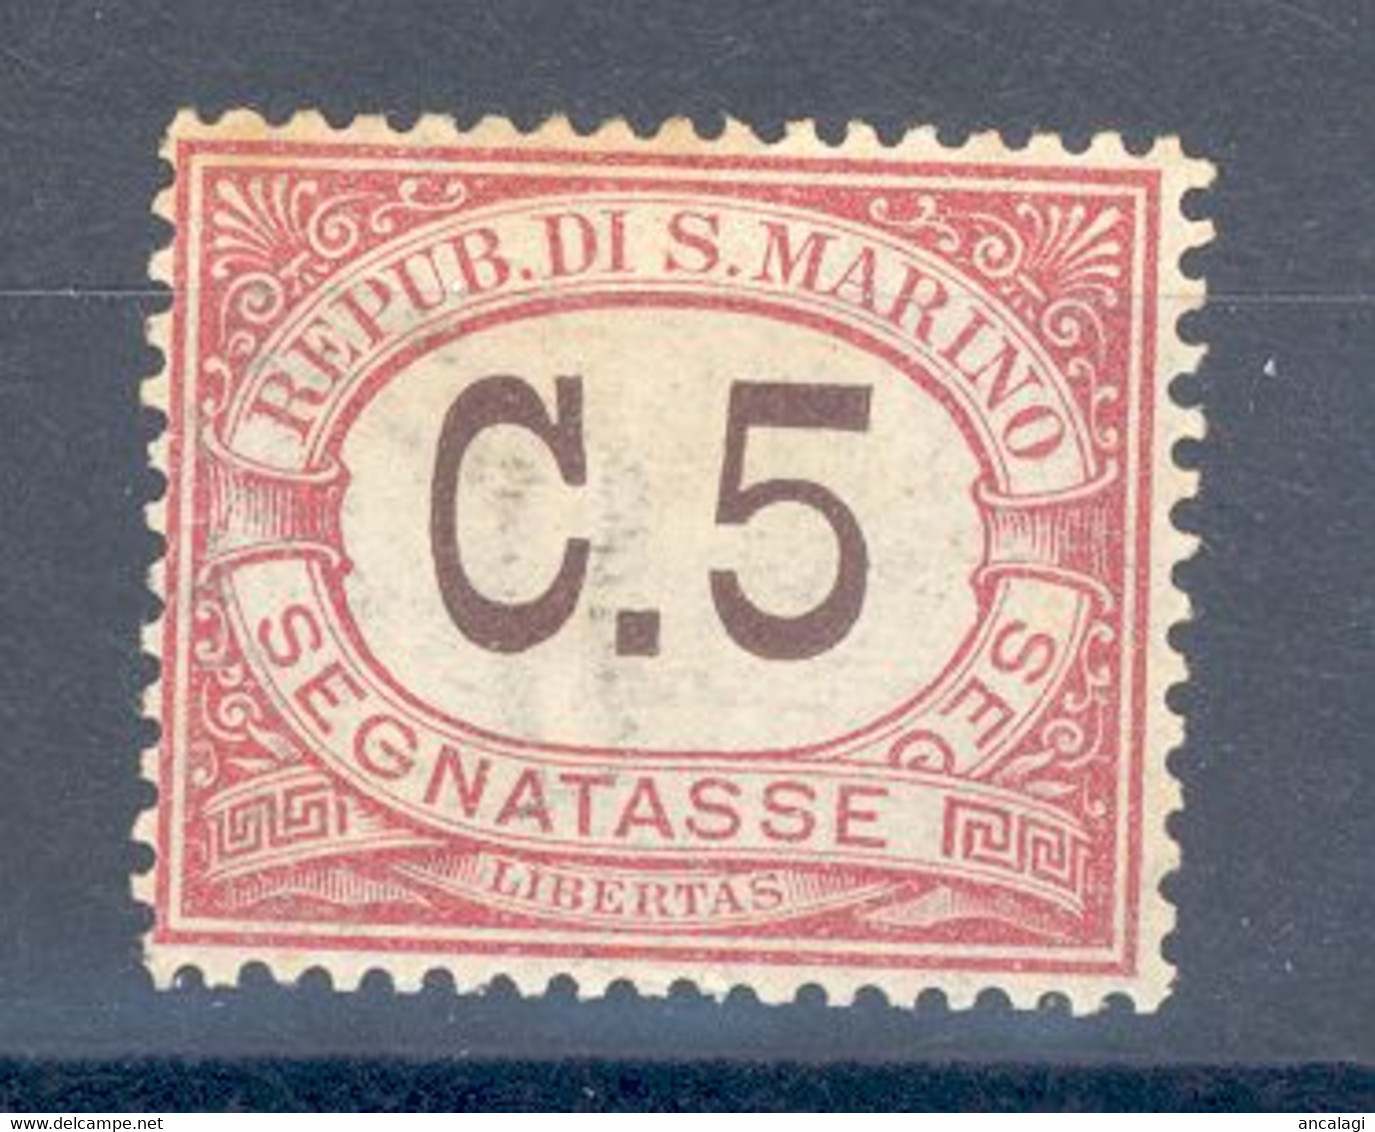 RSM F.lli Nuovi Segnatasse 006 - San Marino 1924 - 1v. C.5 - Postage Due